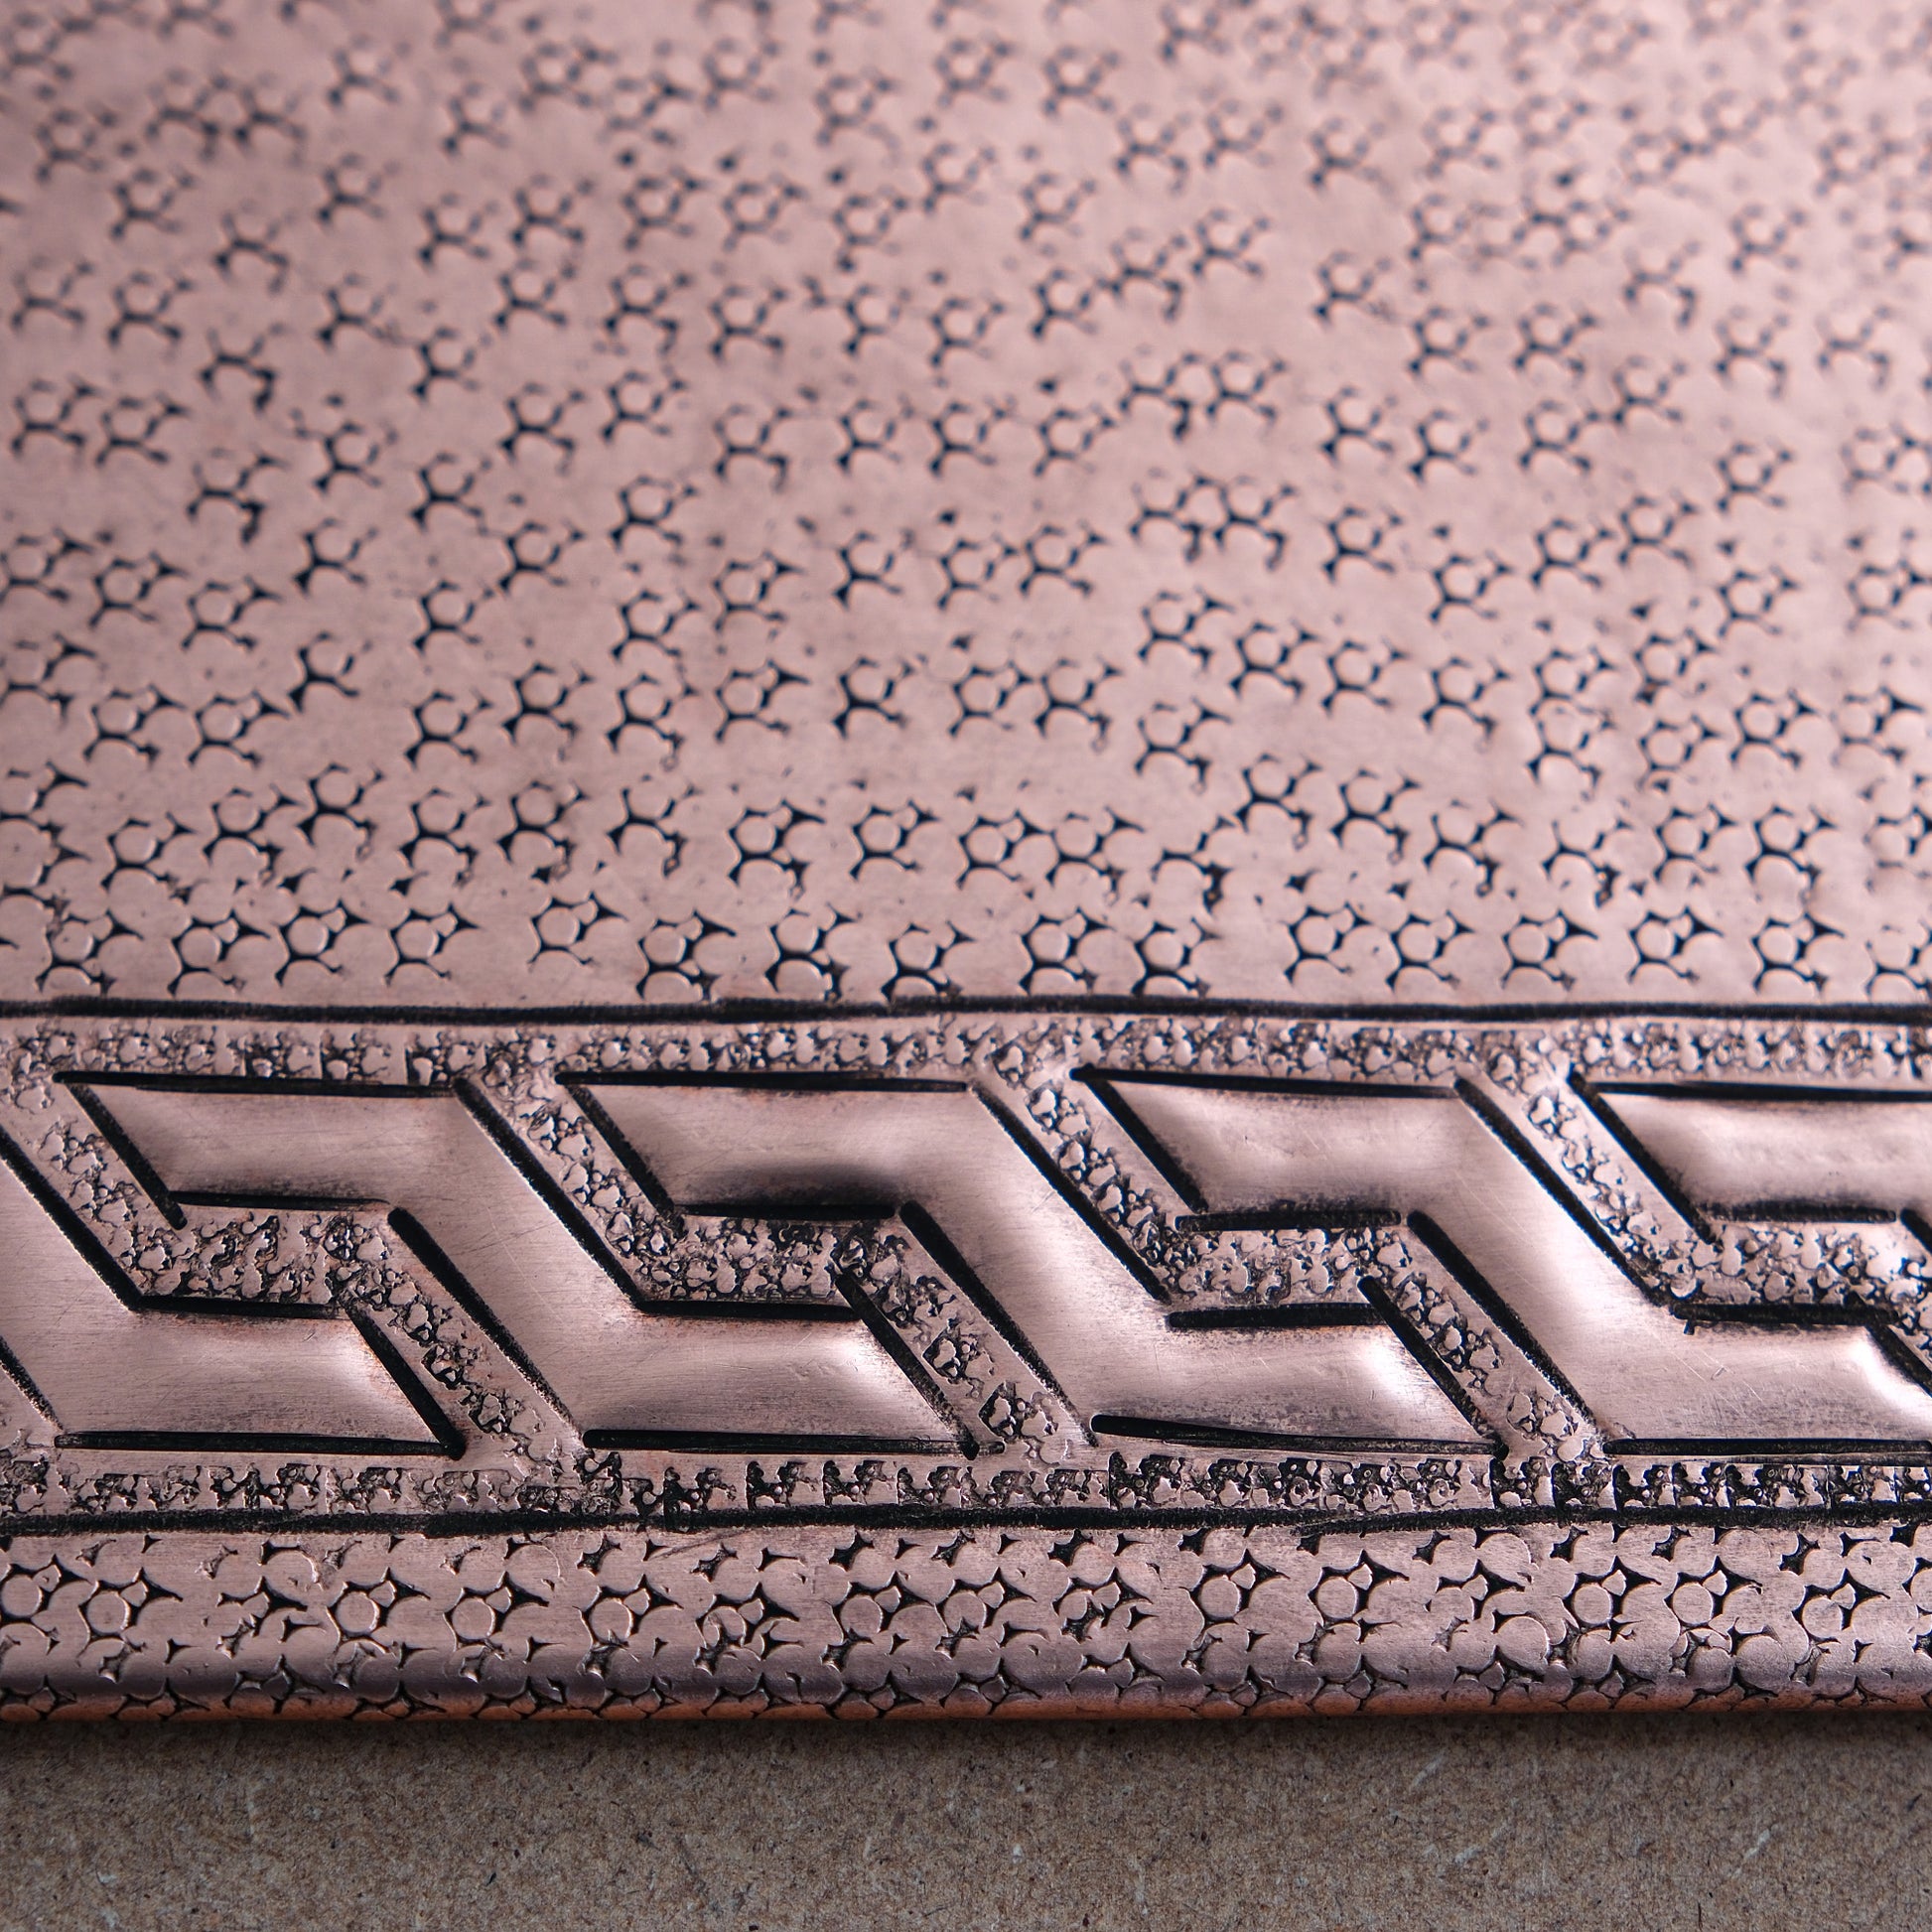 Copper Backsplash Tile (Scottish Thistle,Celtic Knot Border, Personalized)